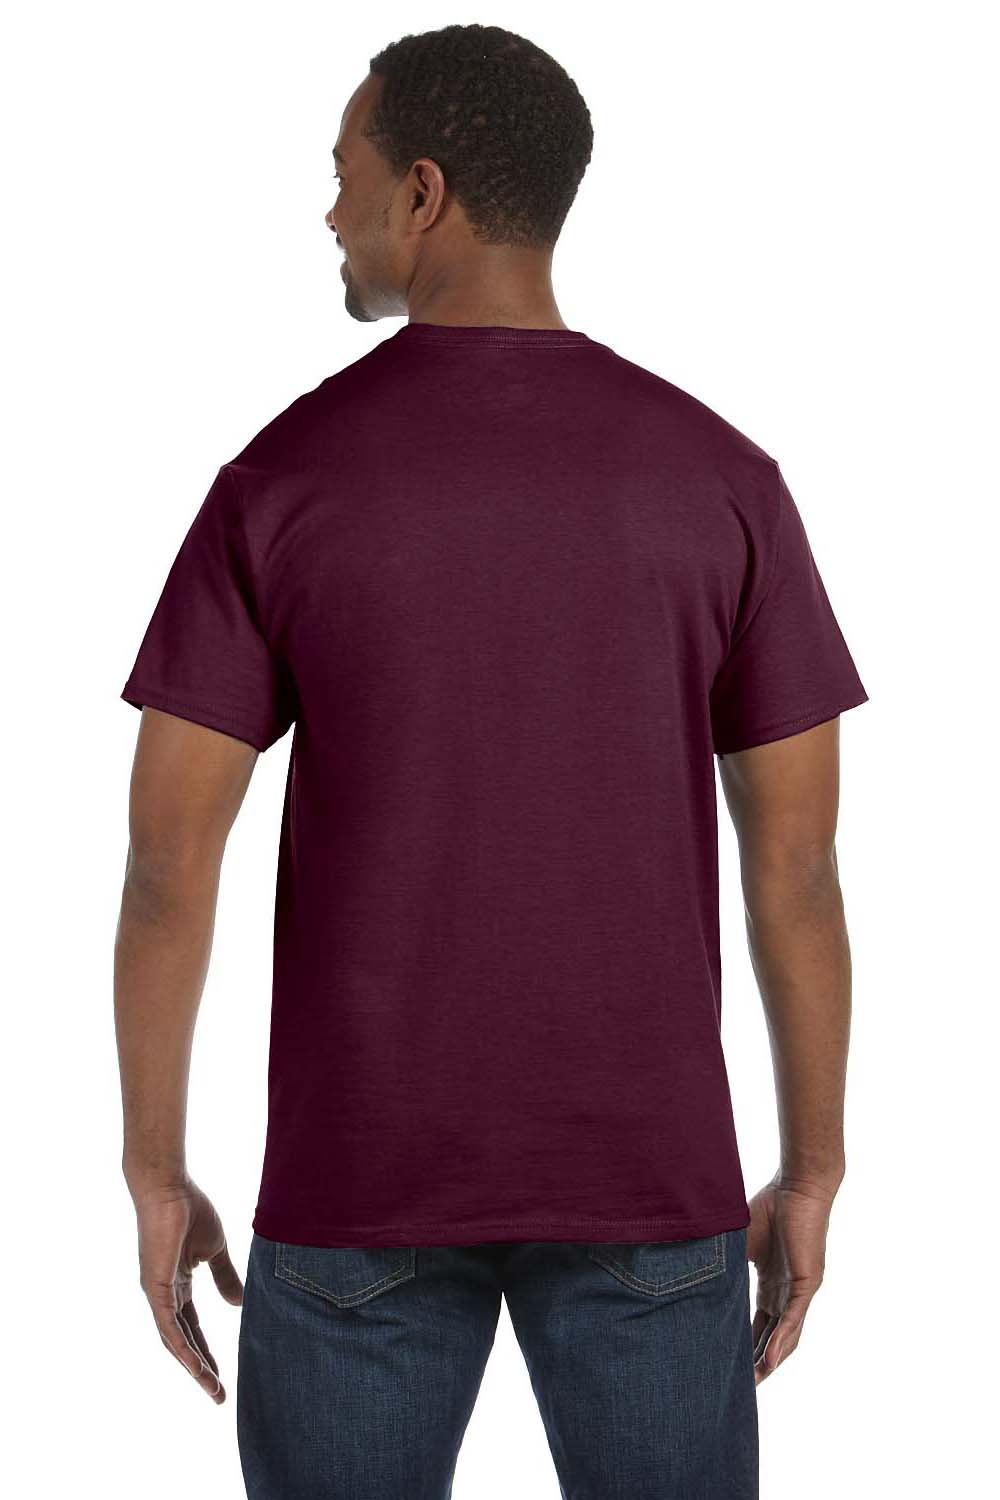 Hanes 5250T Mens ComfortSoft Short Sleeve Crewneck T-Shirt Maroon Back